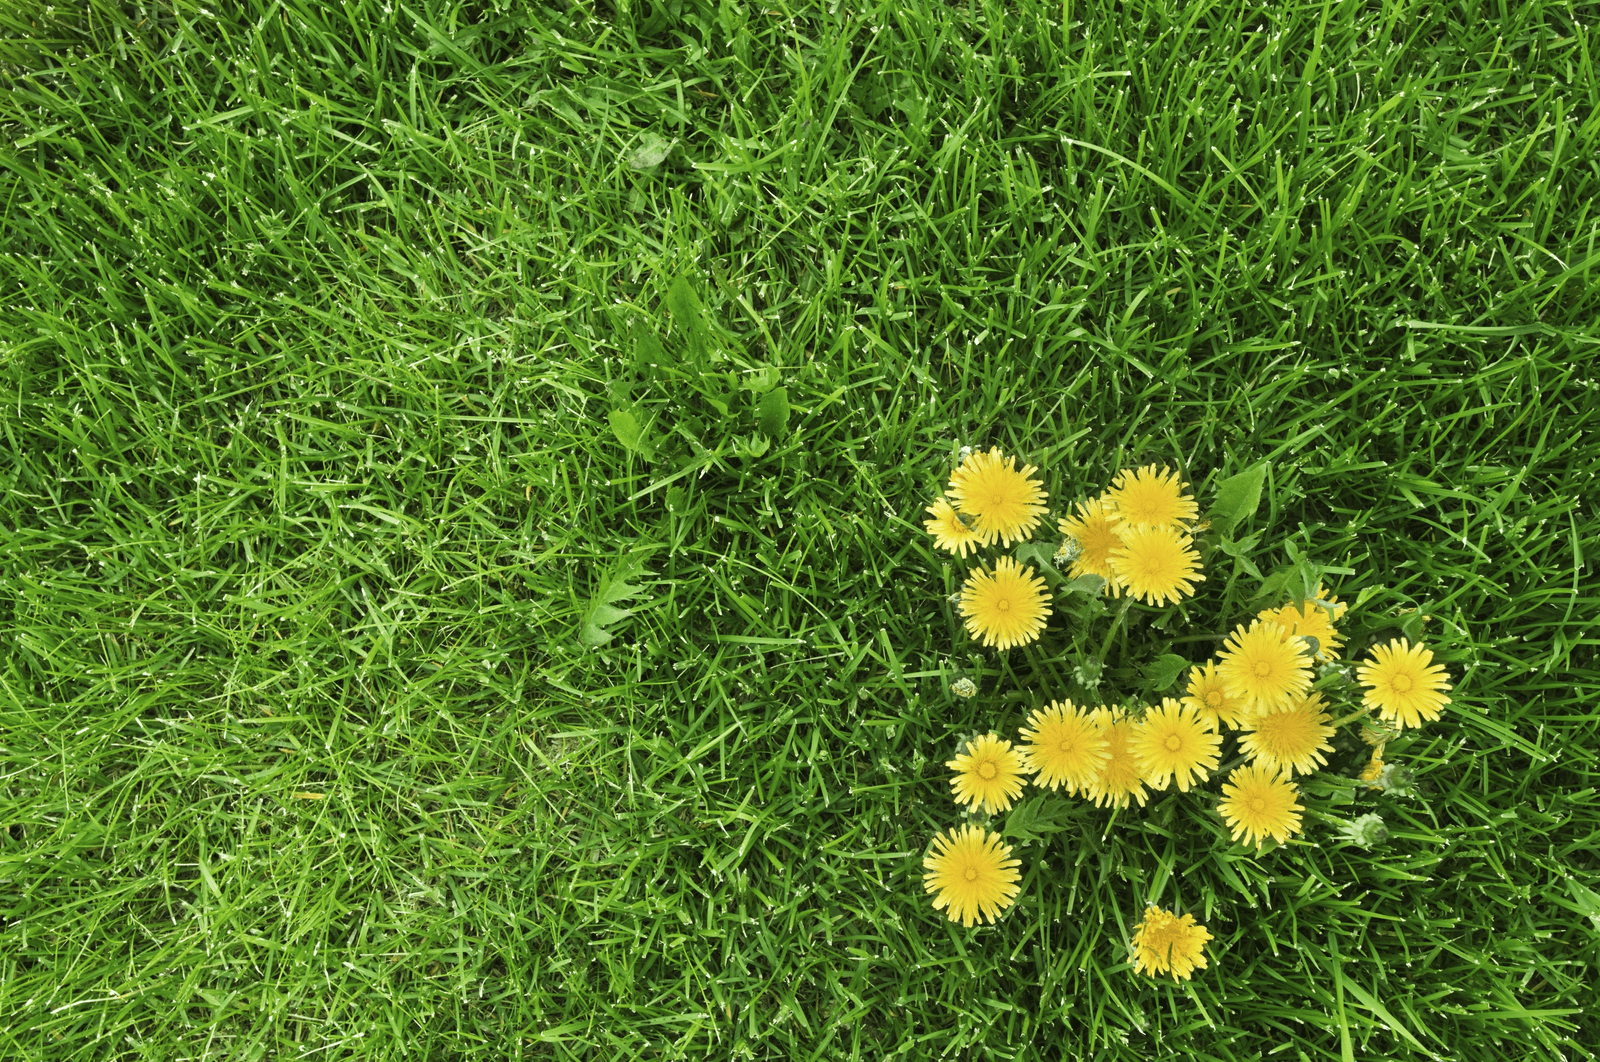 Dandelions in Grass